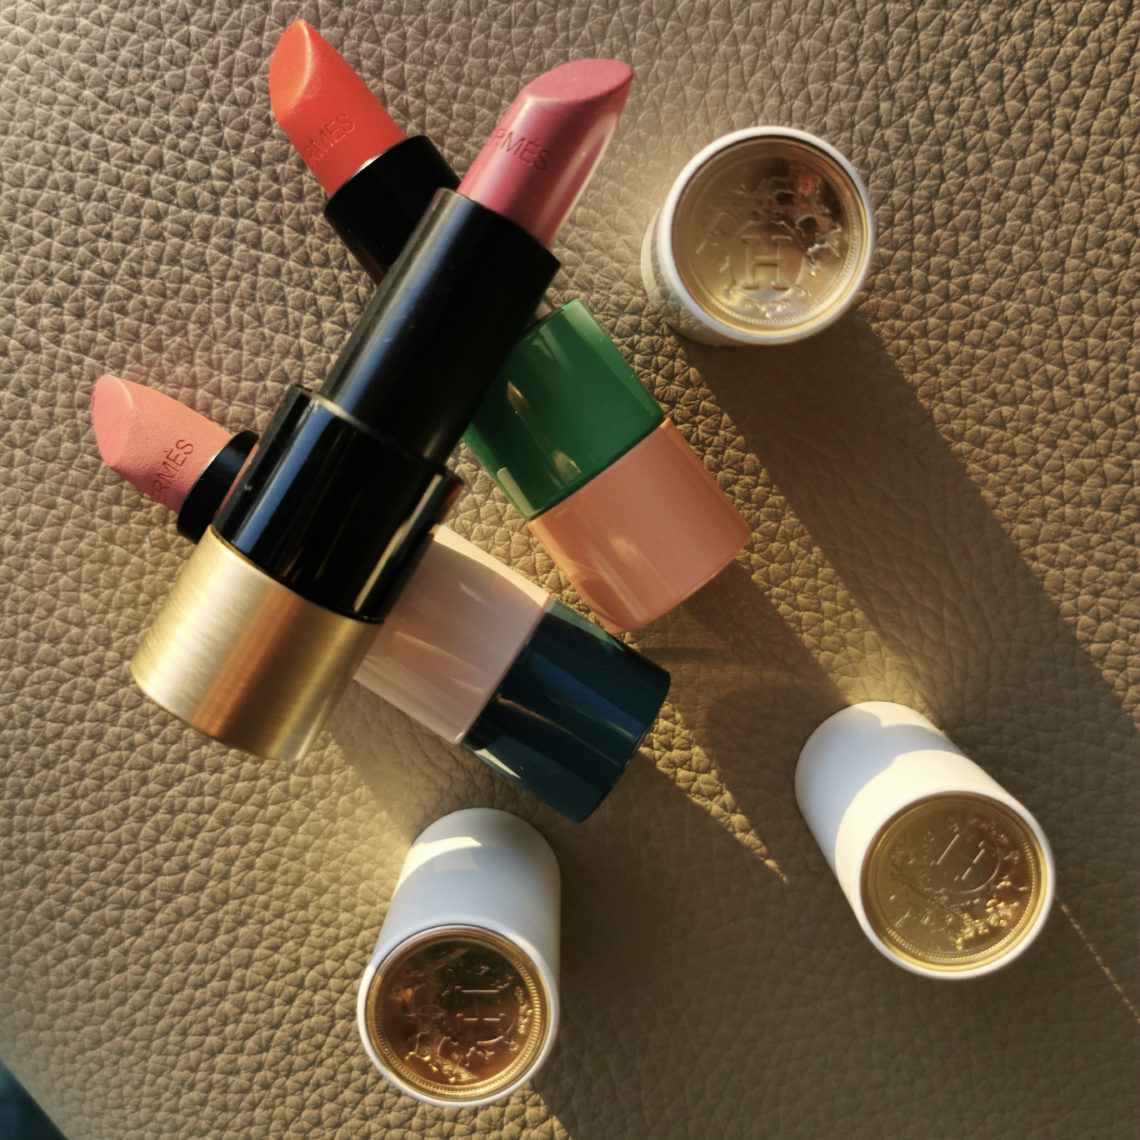 Hermes Lipstick Review I 2020 I